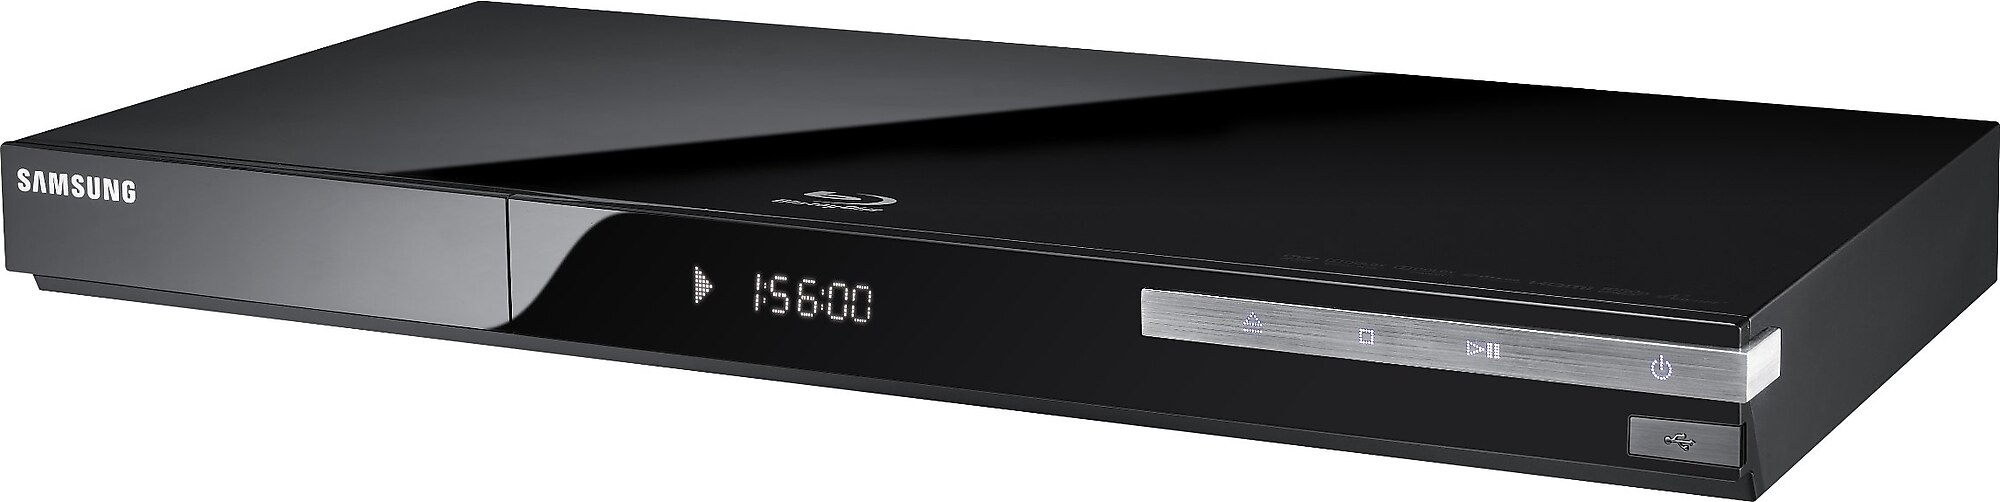 Samsung BD-C5500 1080p Blu-ray Disc  DVD Player 2.EL